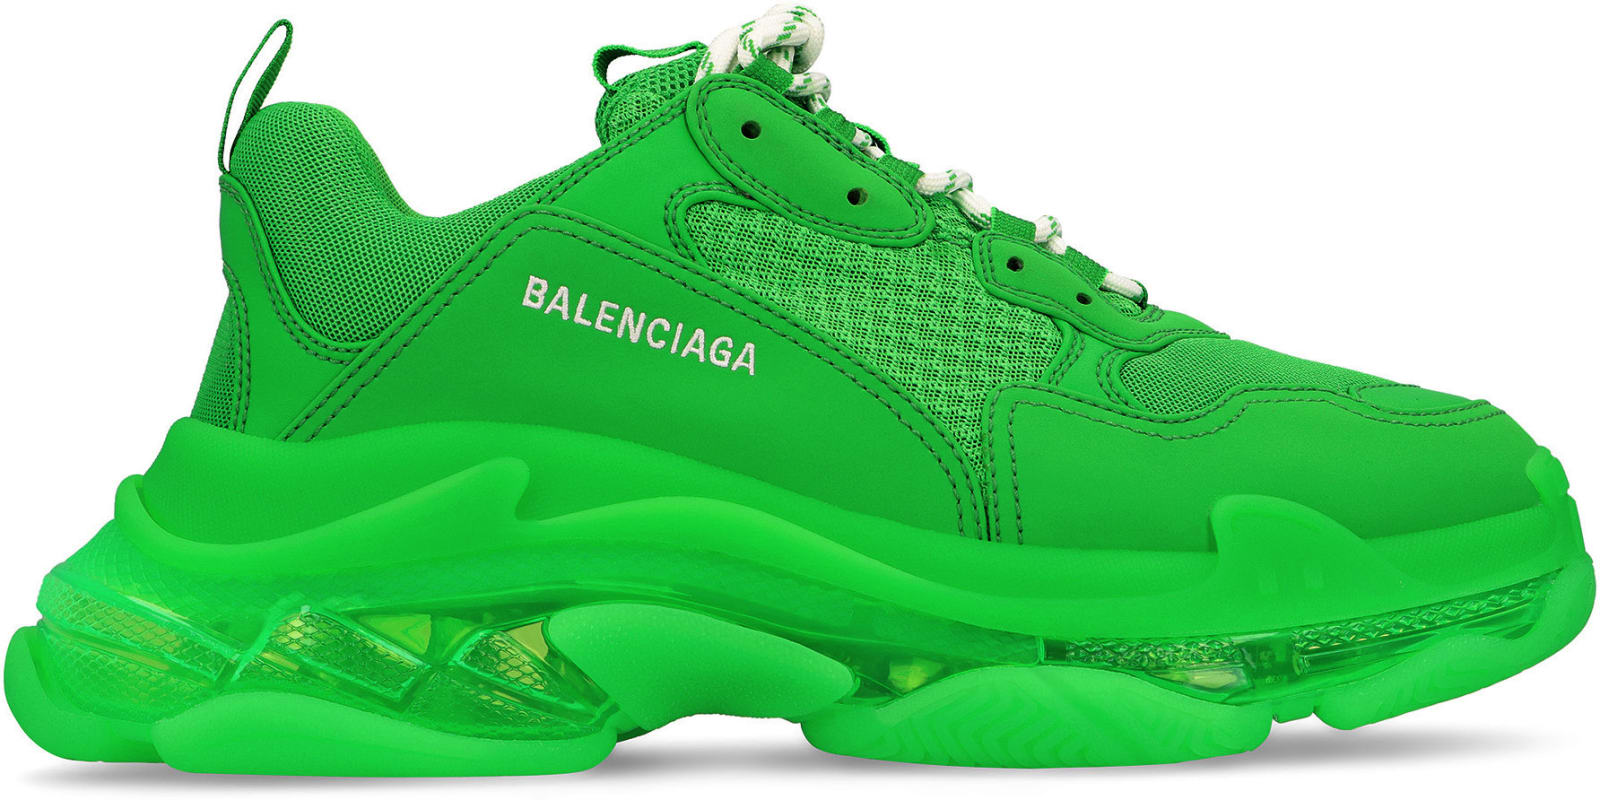 New Balenciaga Triple S Colourway Surfaces  Sneakers men fashion  Balenciaga shoes Sneakers